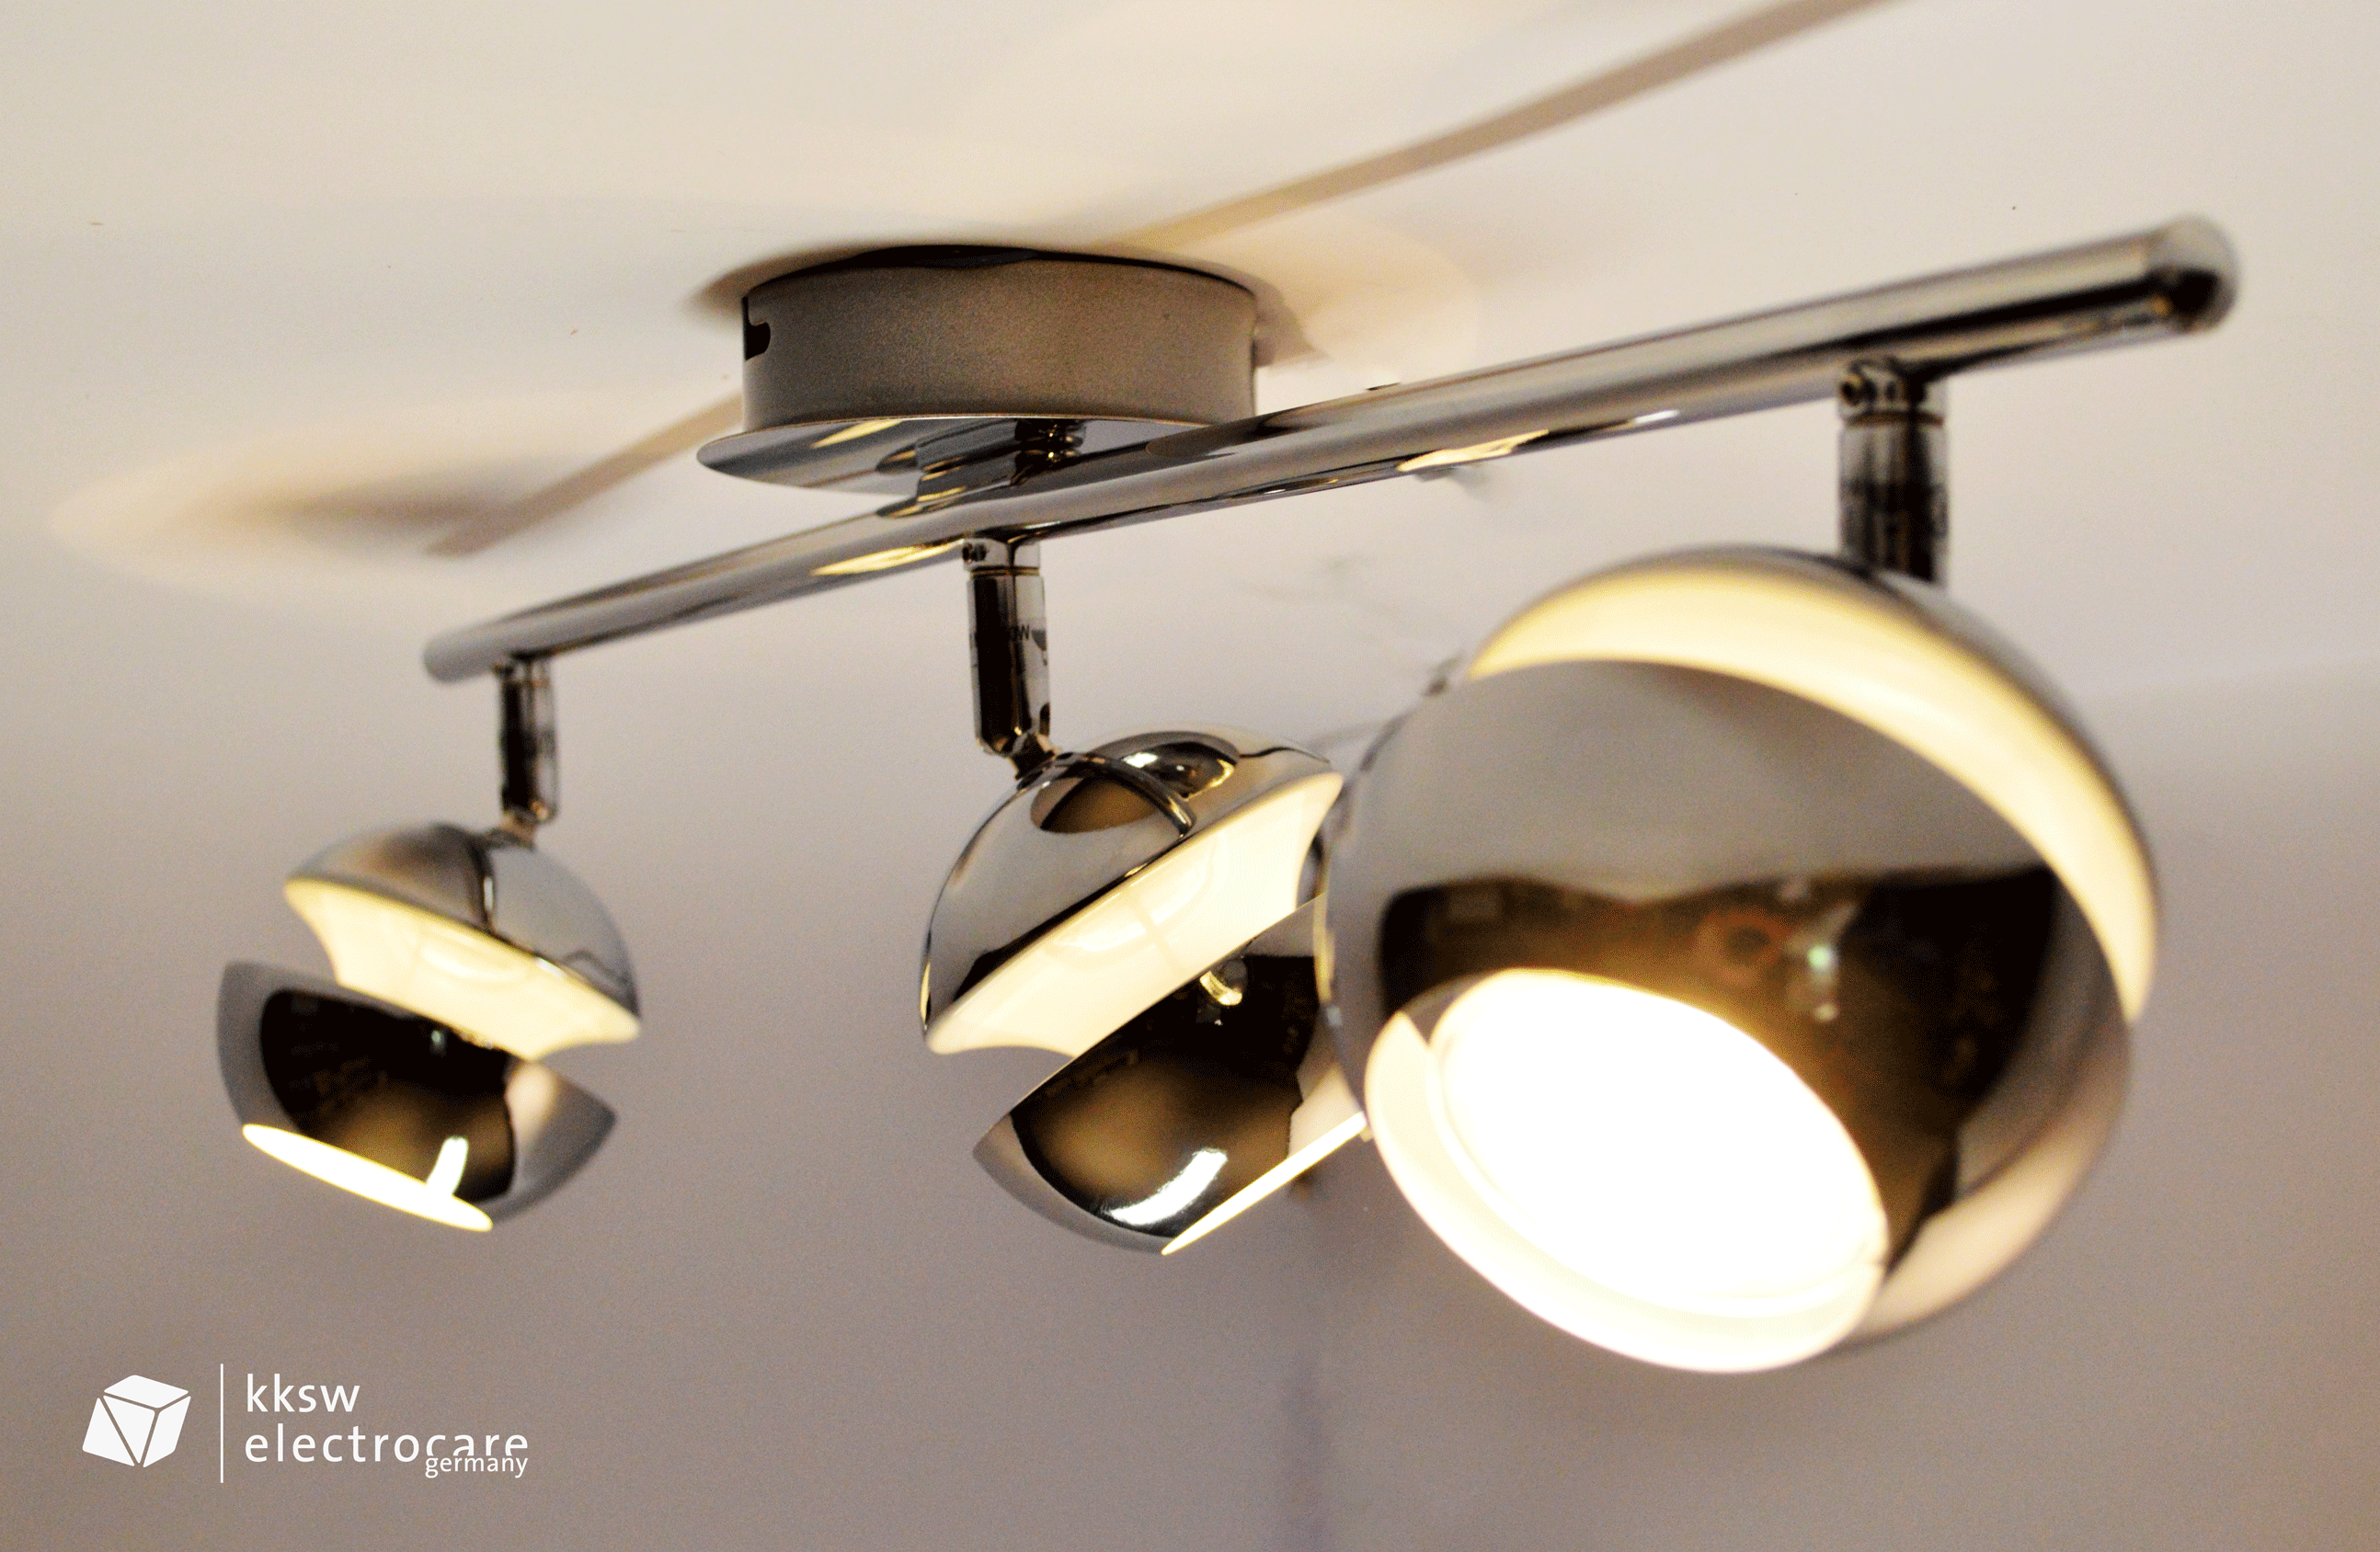 LED Spot Lampe Deckenleuchte, chrom/ weiß, modern, 3- flammig, Metall, Eglo  95479 Nocito | KKSW electrocare